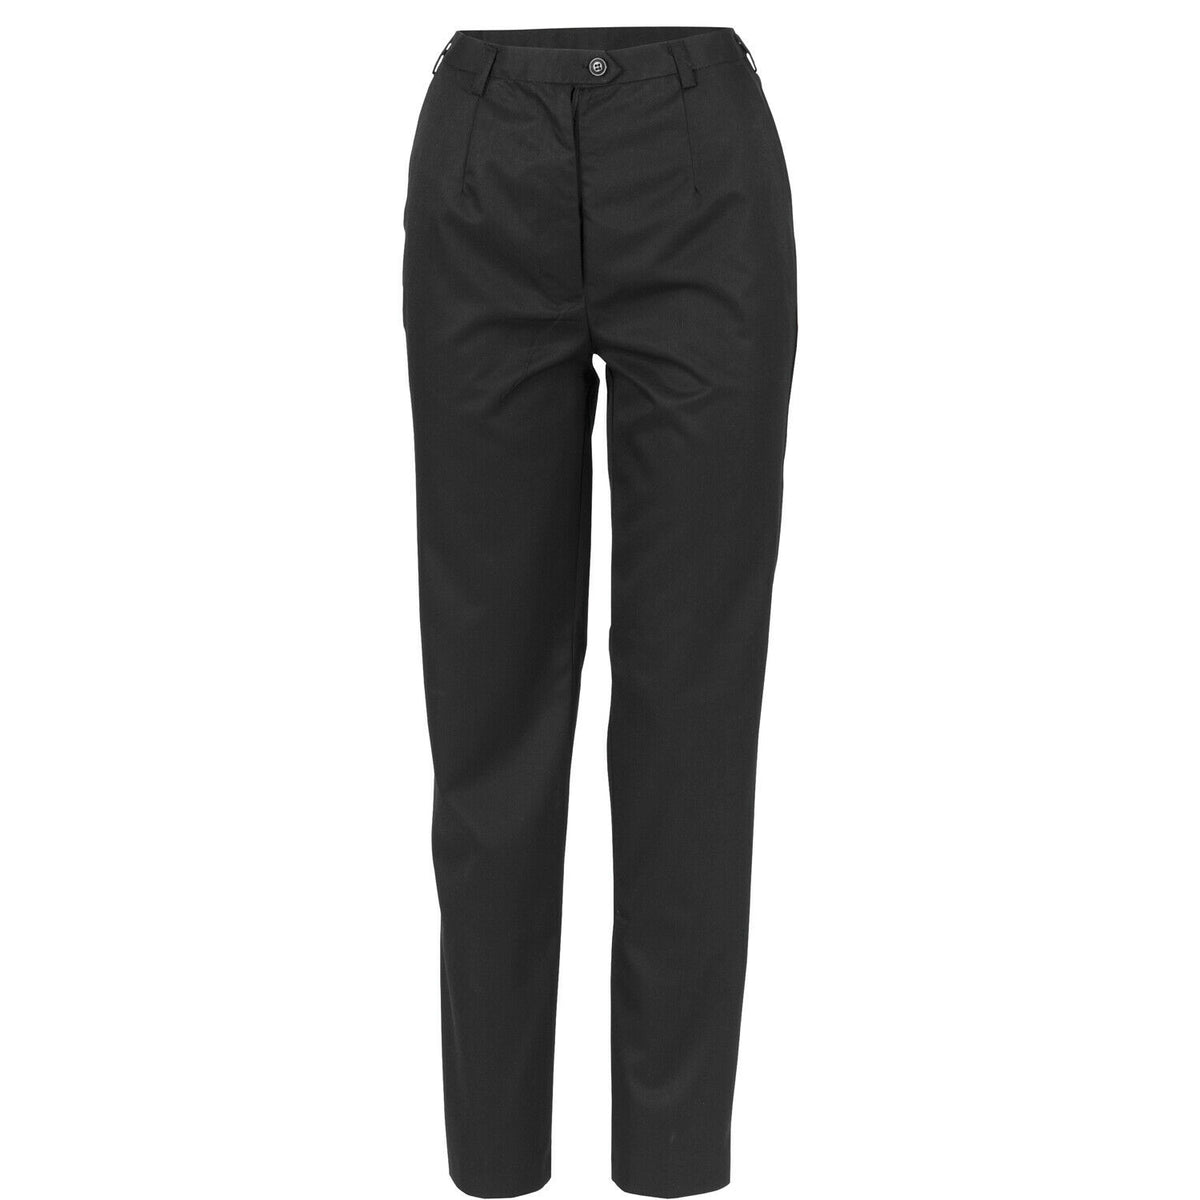 DNC Workwear Womens P/V Flat Front Pant Cargo Pants Tough Work Casual 4552